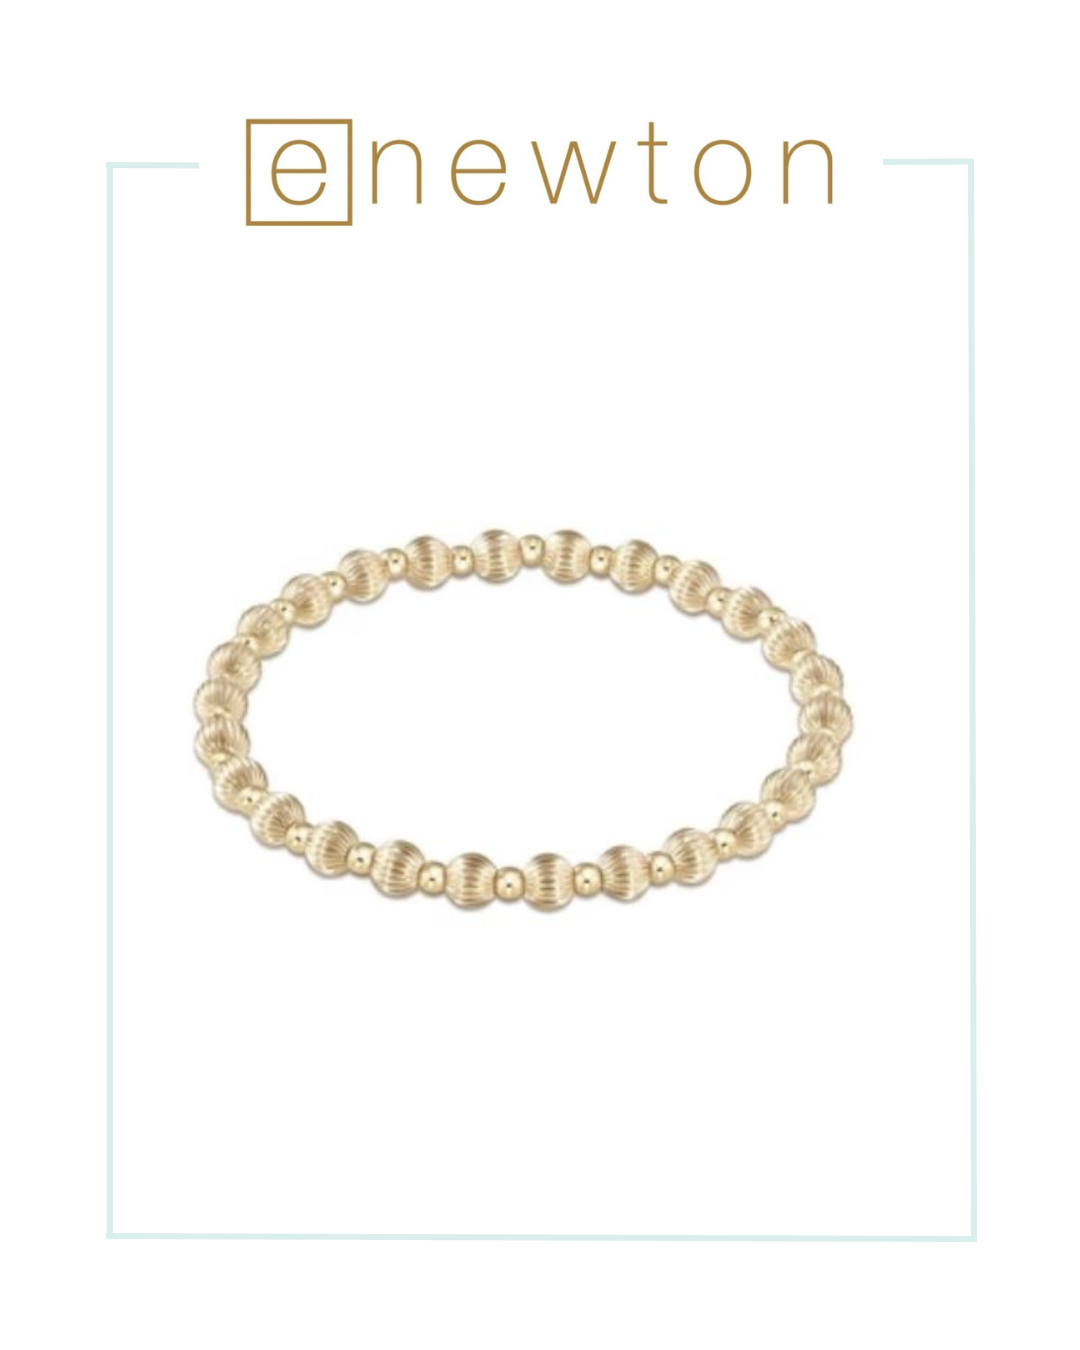 E Newton Dignity Grateful Pattern 5mm Bead Bracelet - Gold-Bracelets-ENEWTON-The Village Shoppe, Women’s Fashion Boutique, Shop Online and In Store - Located in Muscle Shoals, AL.